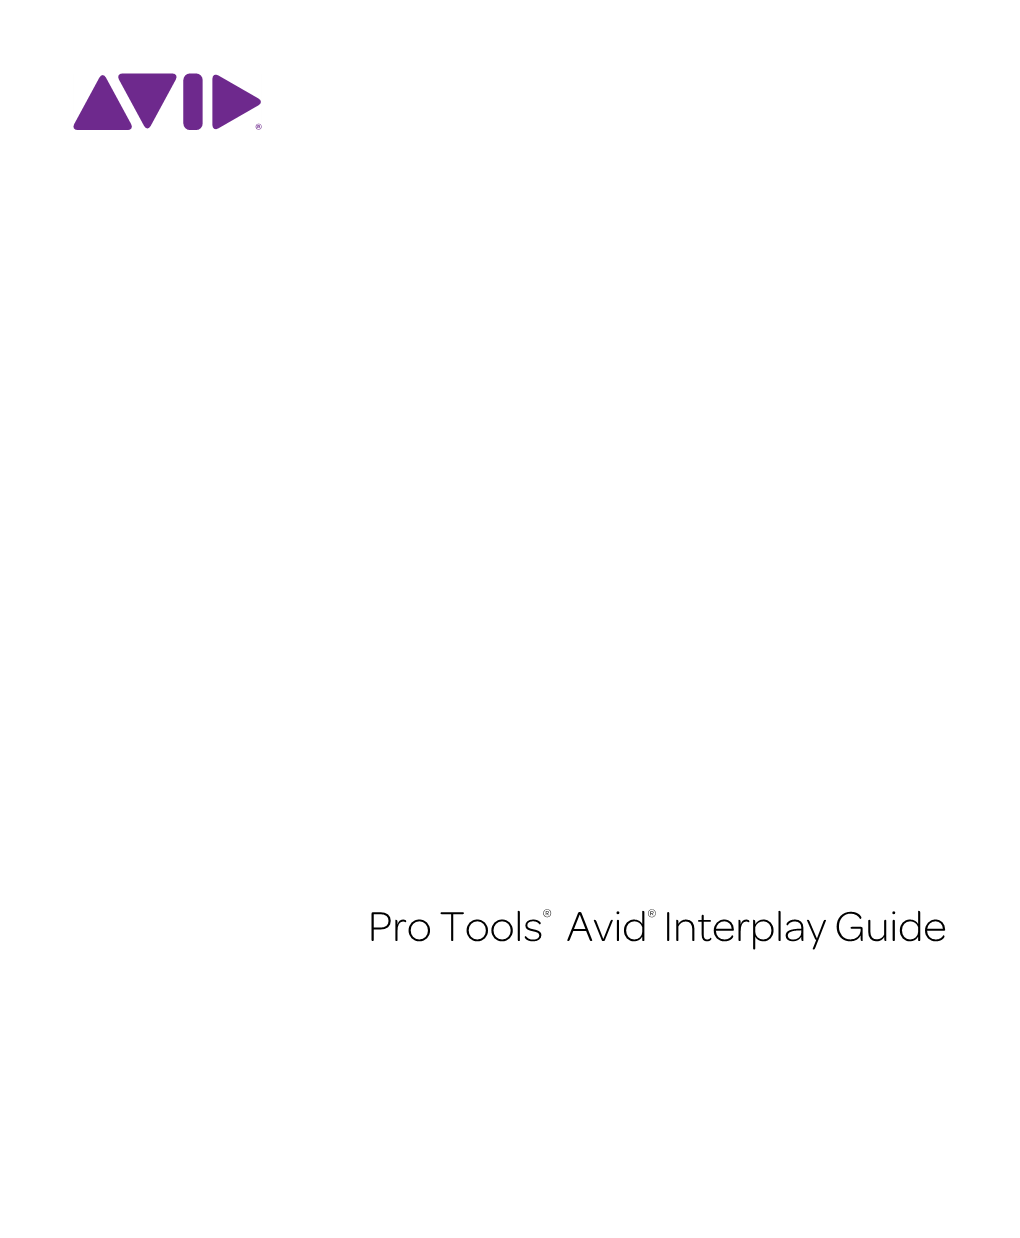 Pro Tools Avid Interplay Guide